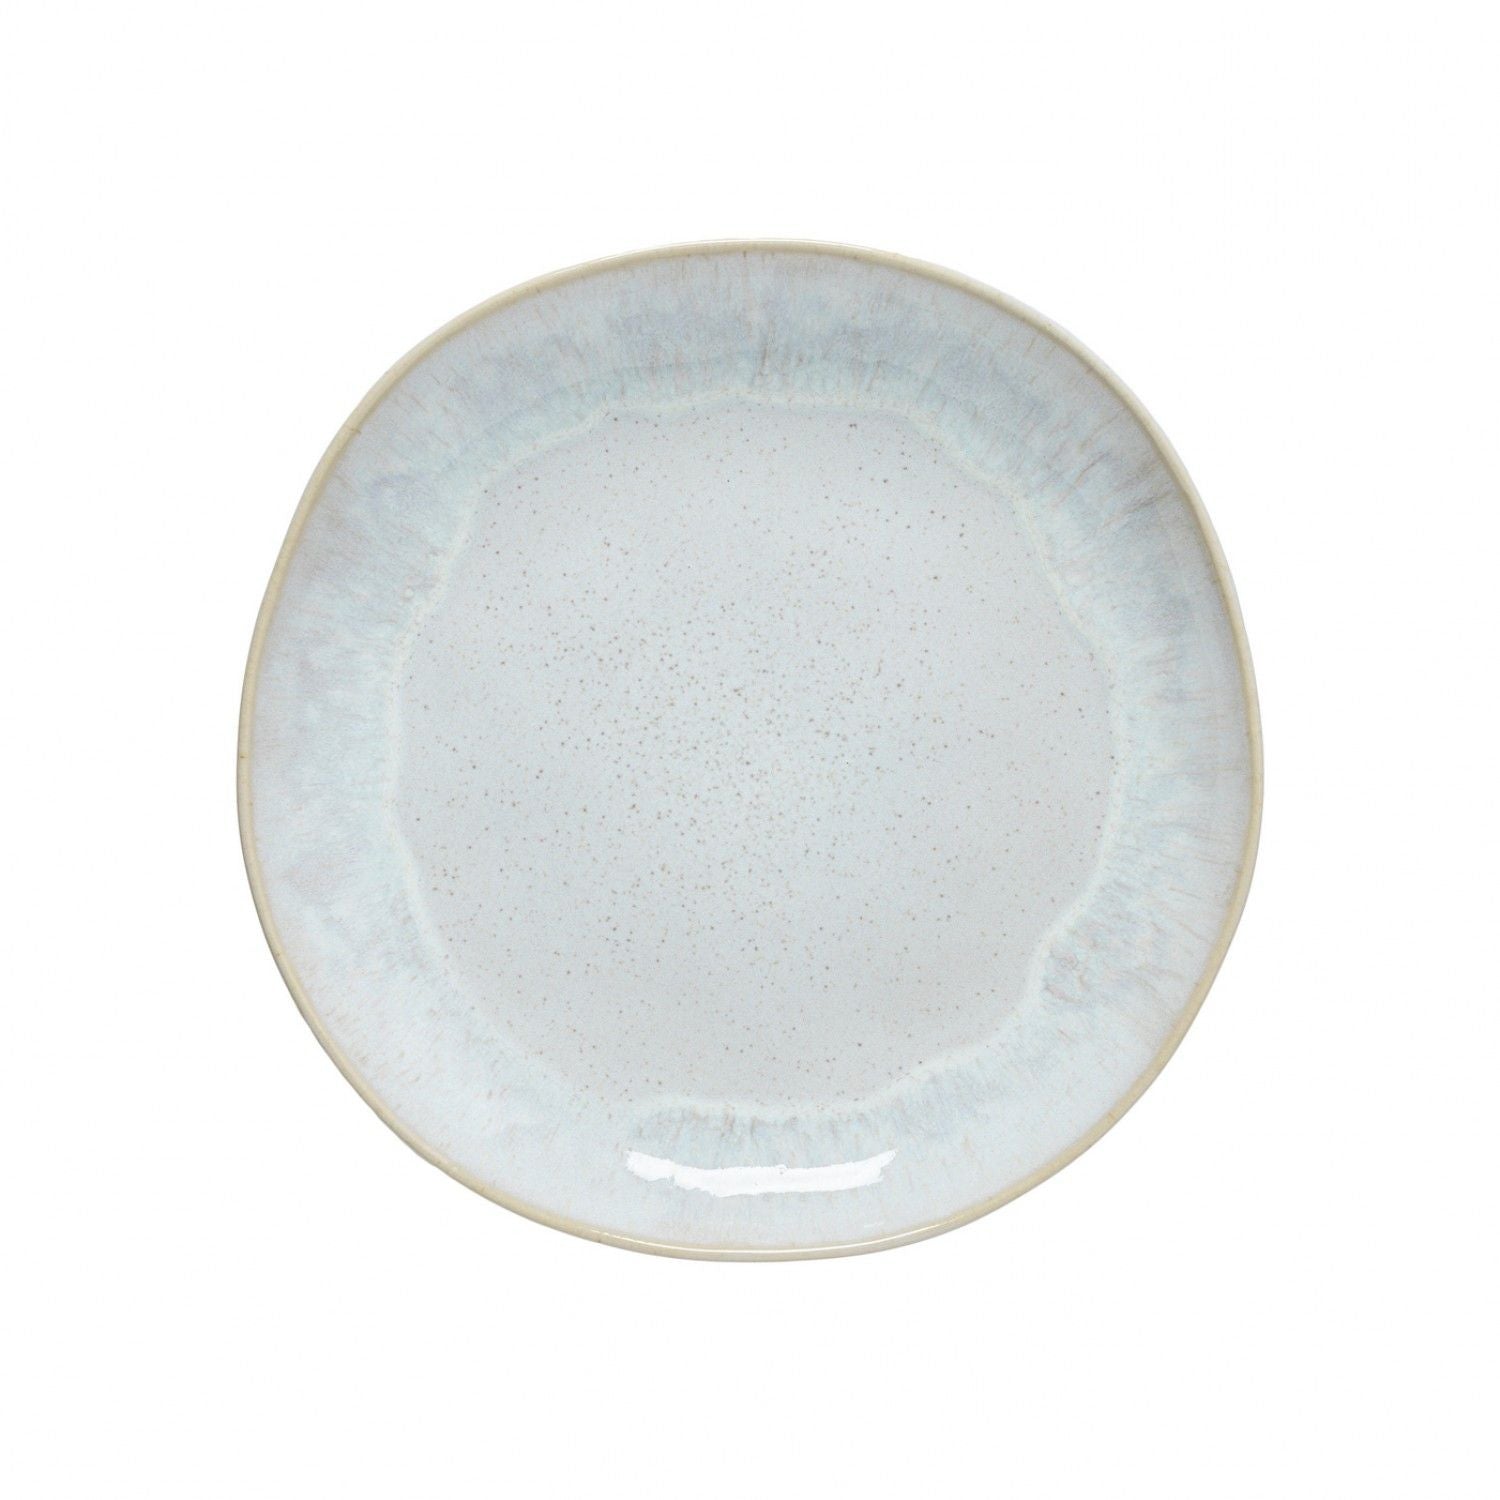 Eivissa Reactive Glaze Dinner Plate, Set of 6